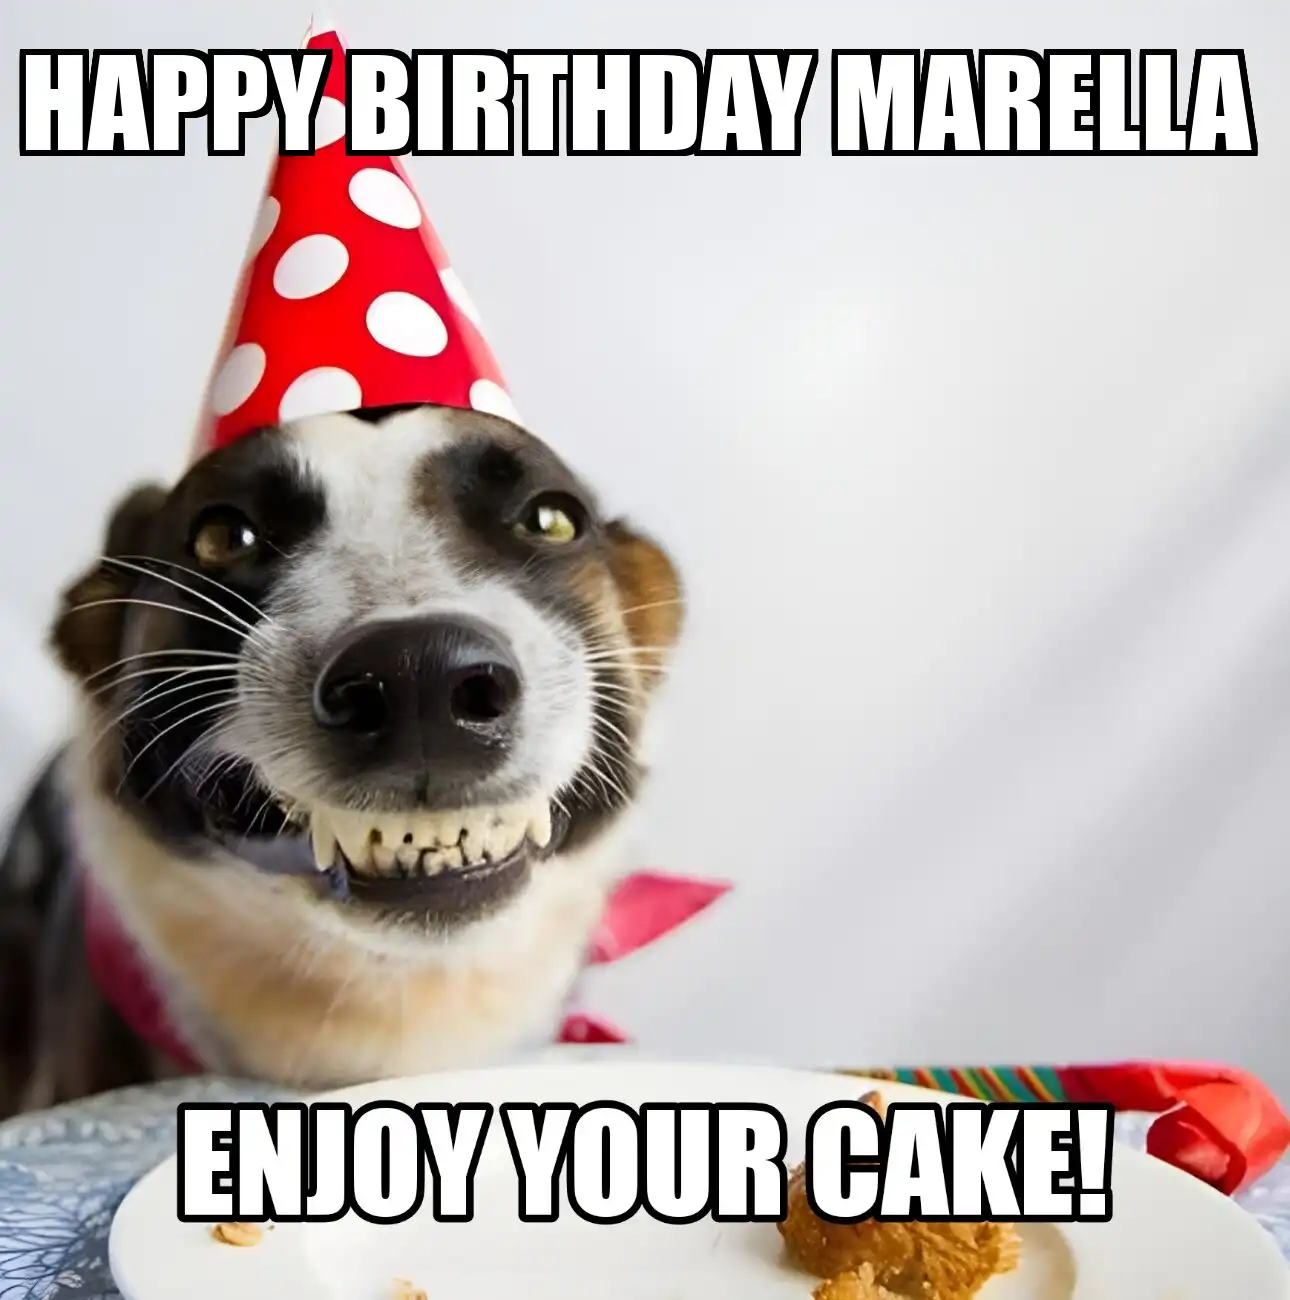 Happy Birthday Marella Enjoy Your Cake Dog Meme